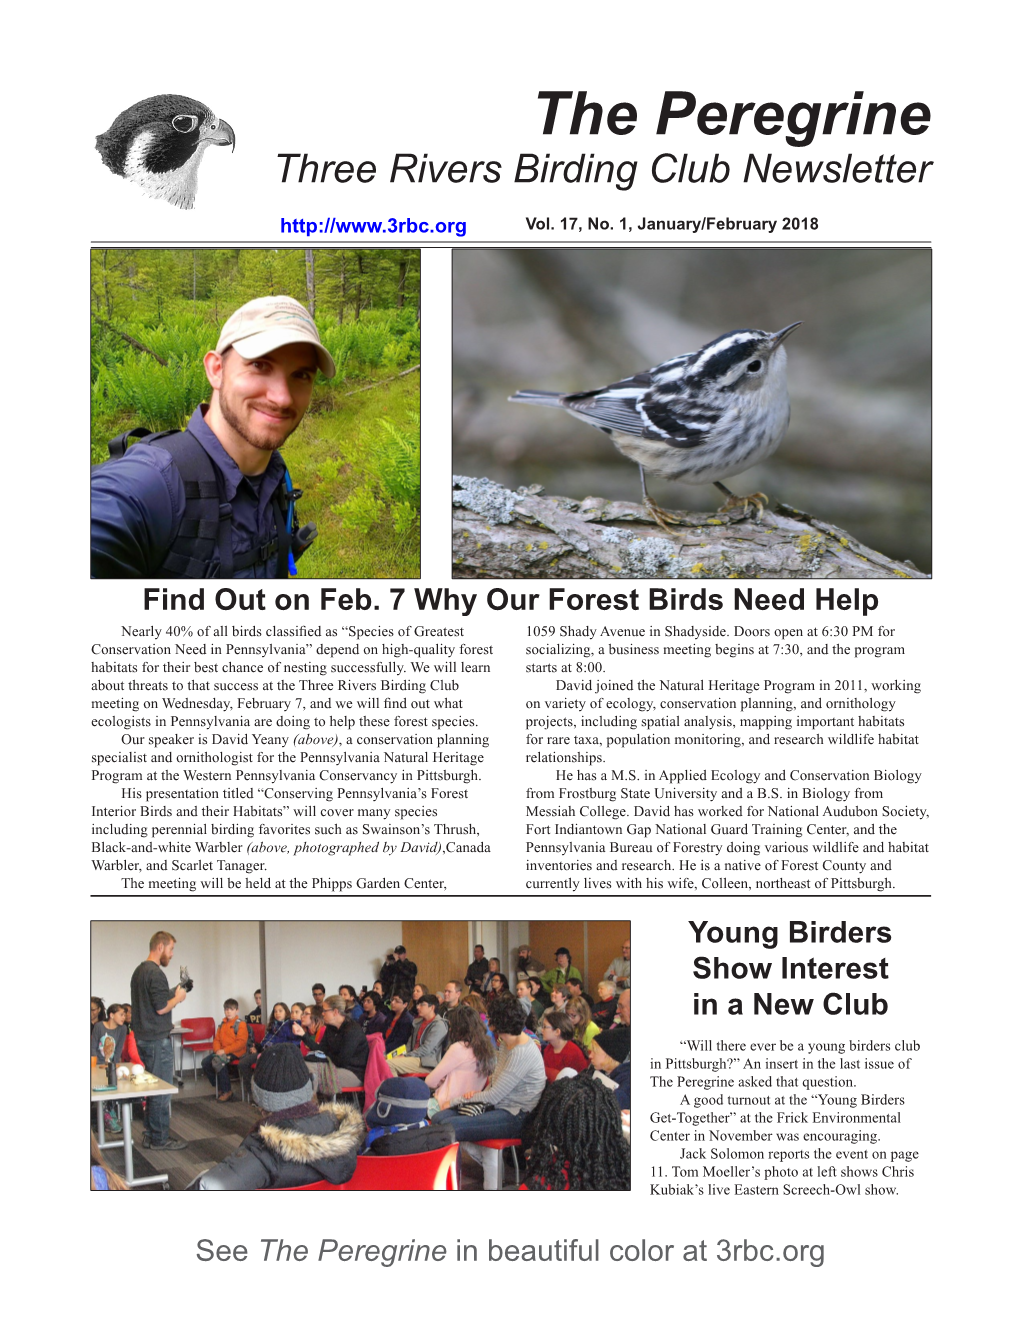 The Peregrine Three Rivers Birding Club Newsletter